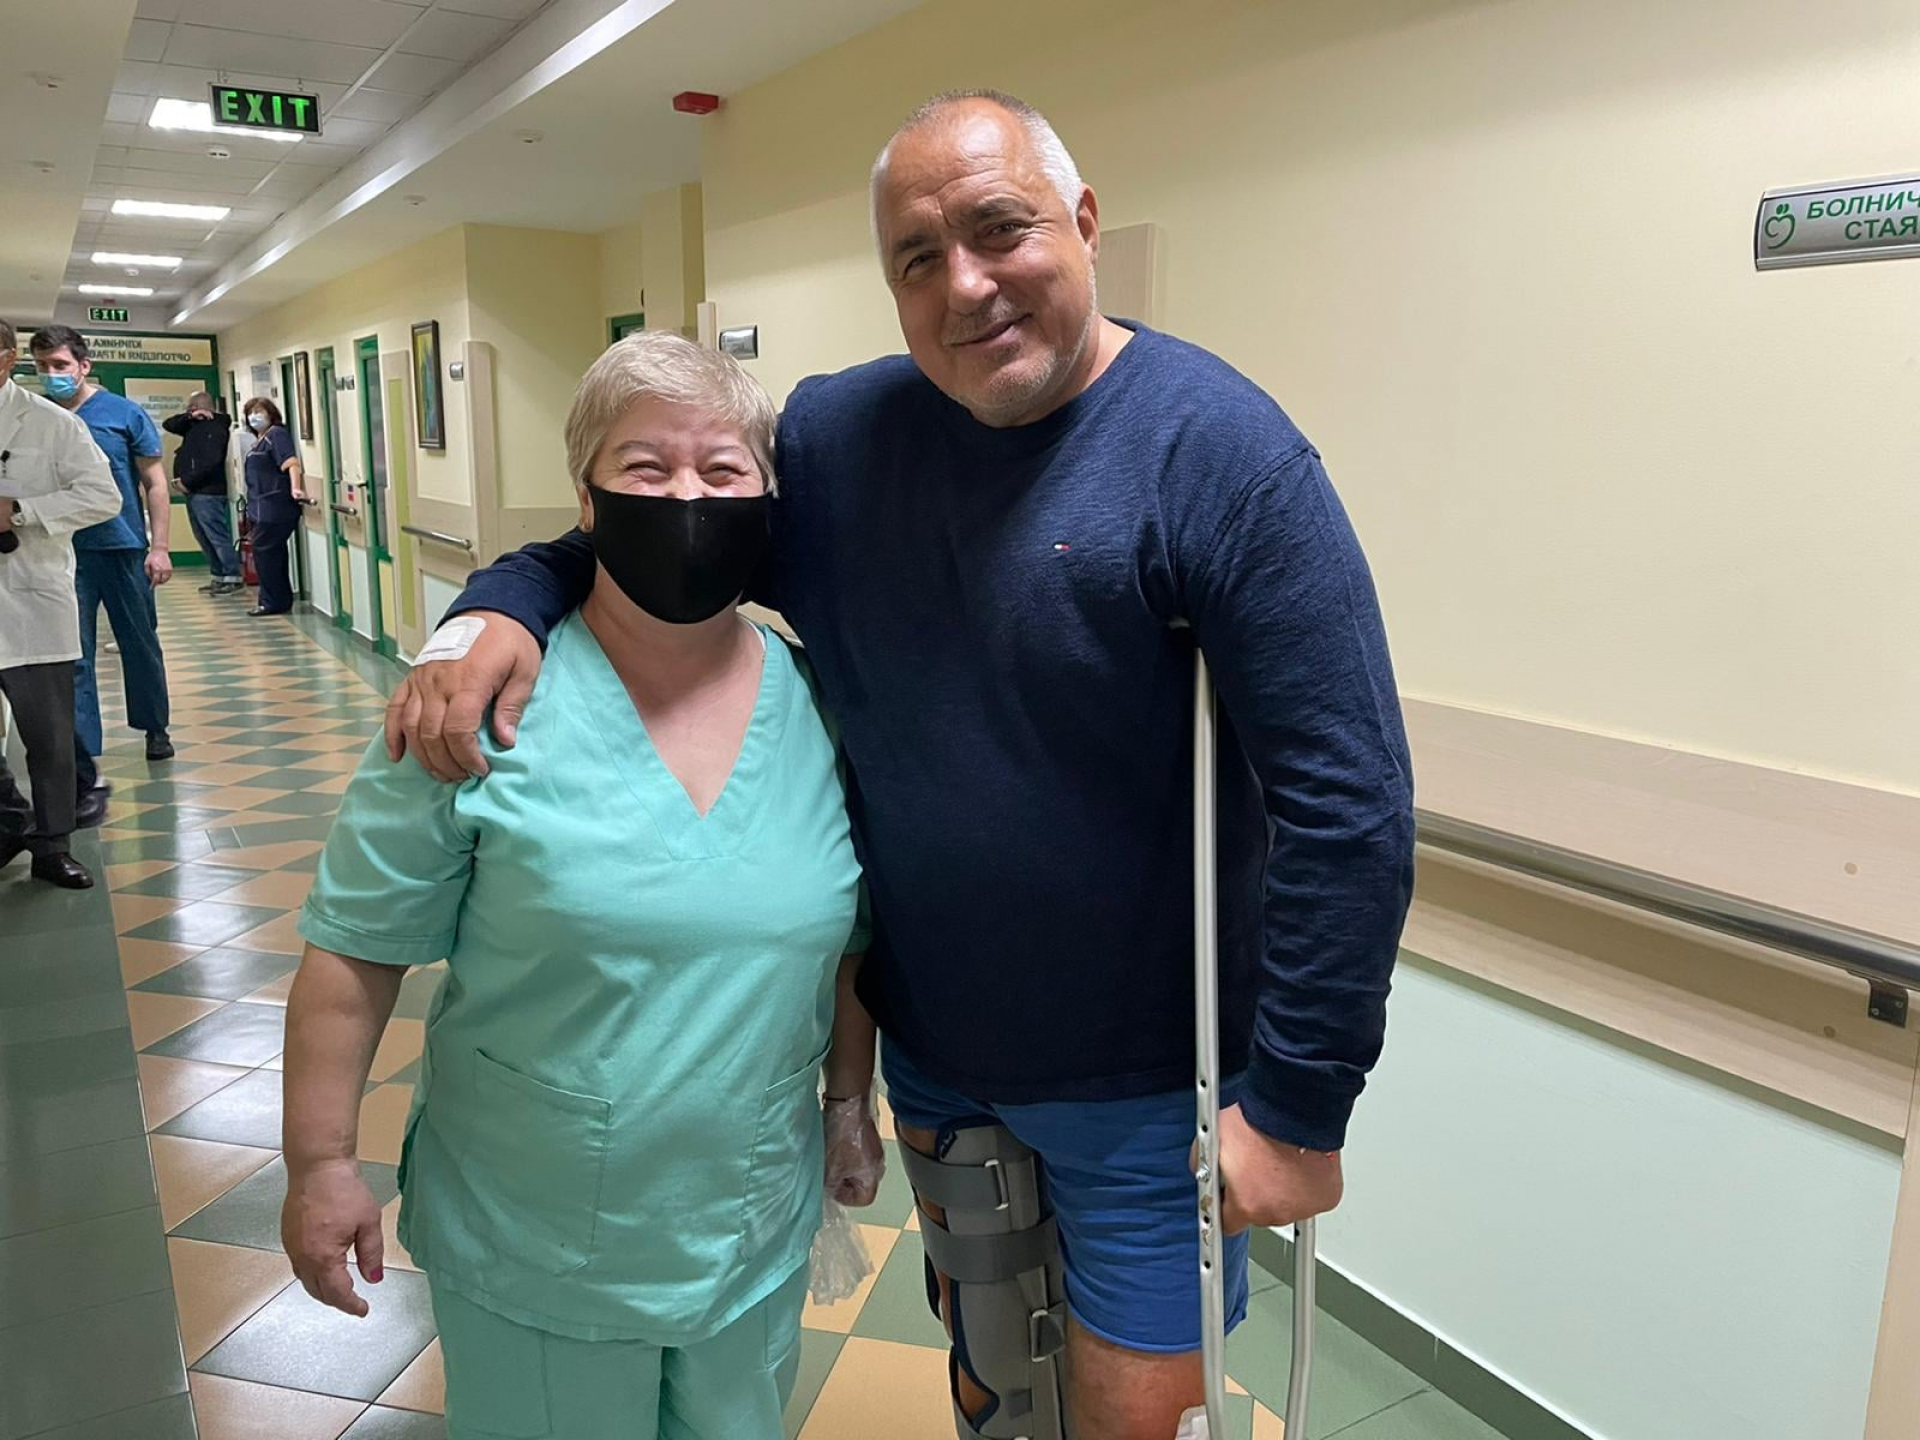 Красиви жени наобиколиха Борисов в болницата СНИМКИ